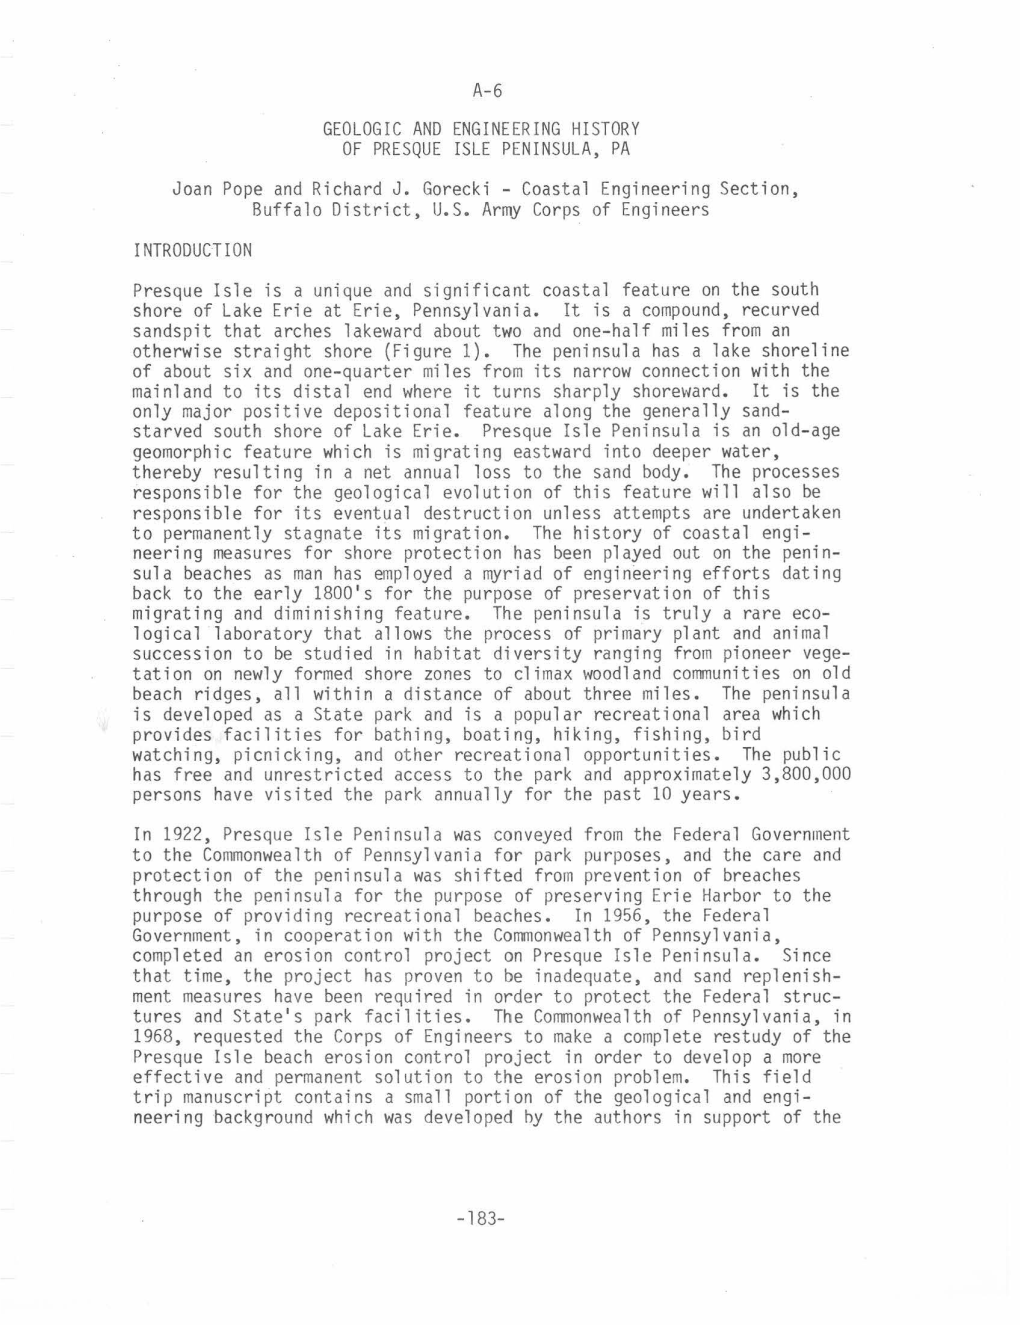 A-6 GEOLOGIC and ENGINEERING HISTORY of PRESQUE ISLE PENINSULA, PA Joan Pope and Richard J